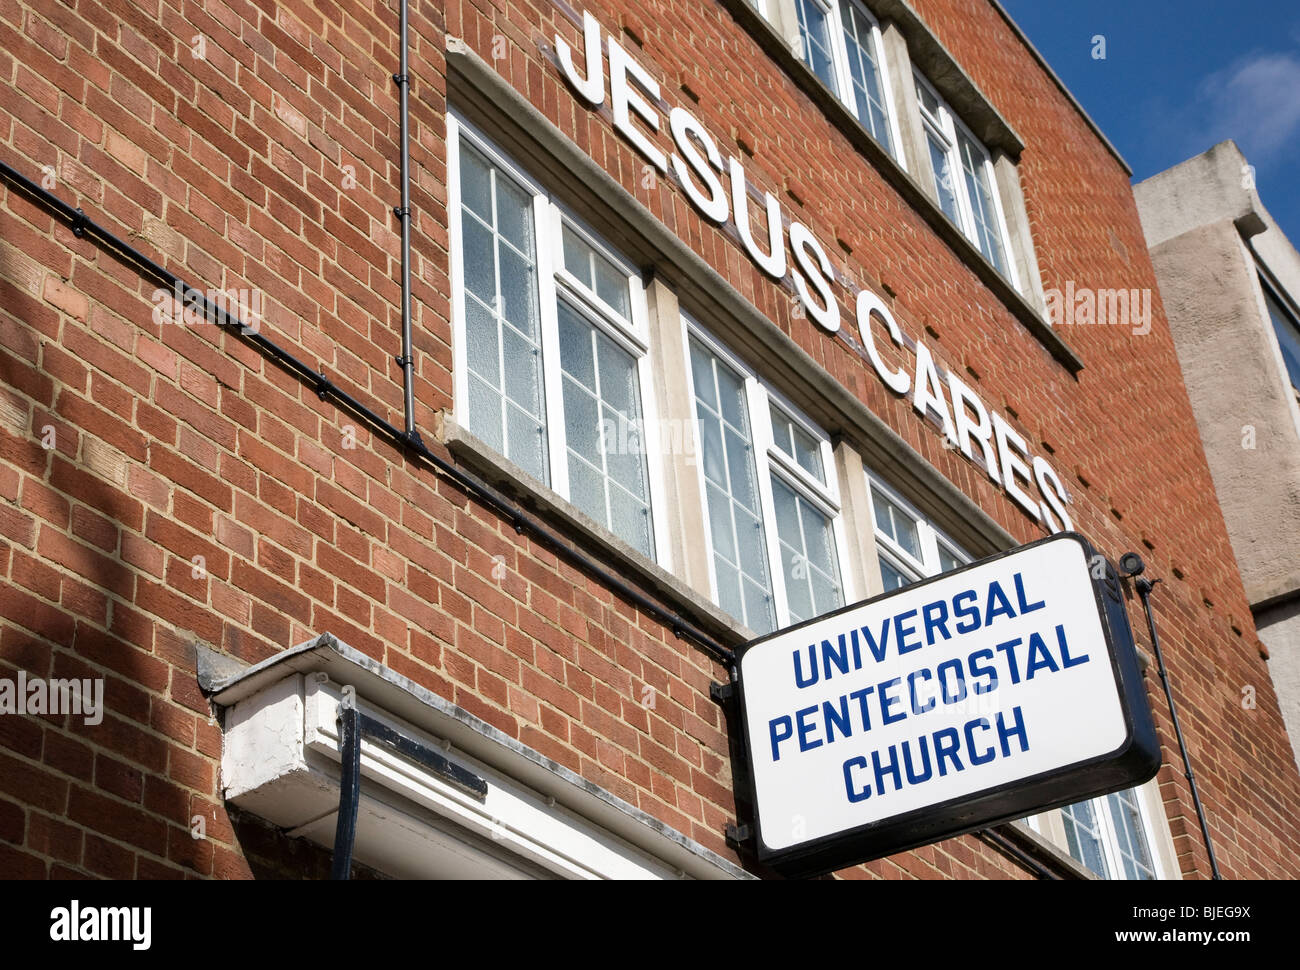 Pentecostal church in Brixton, South London Stock Photo